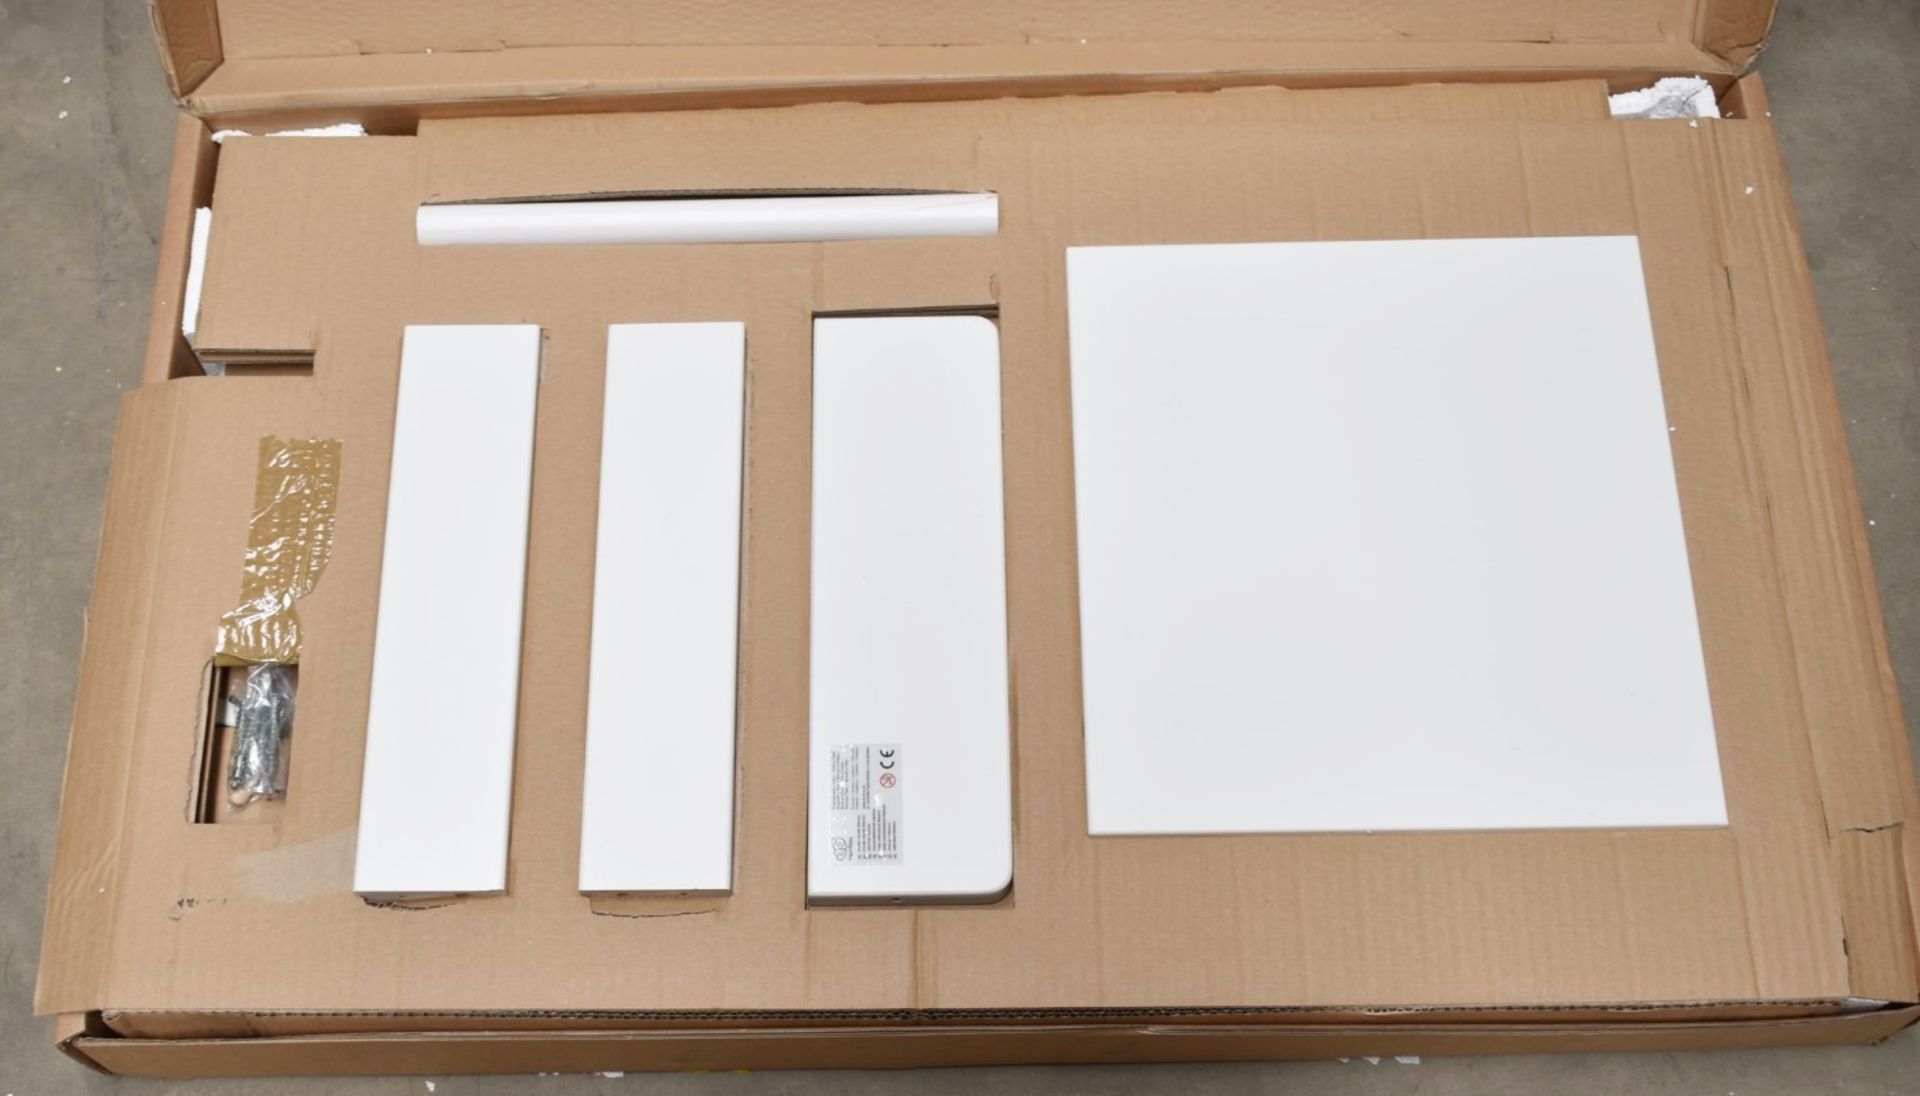 1 x MEOWBABY Wooden Kitchen Helper Premium In White - Original Price £149.00 - Unused Boxed - Image 5 of 5